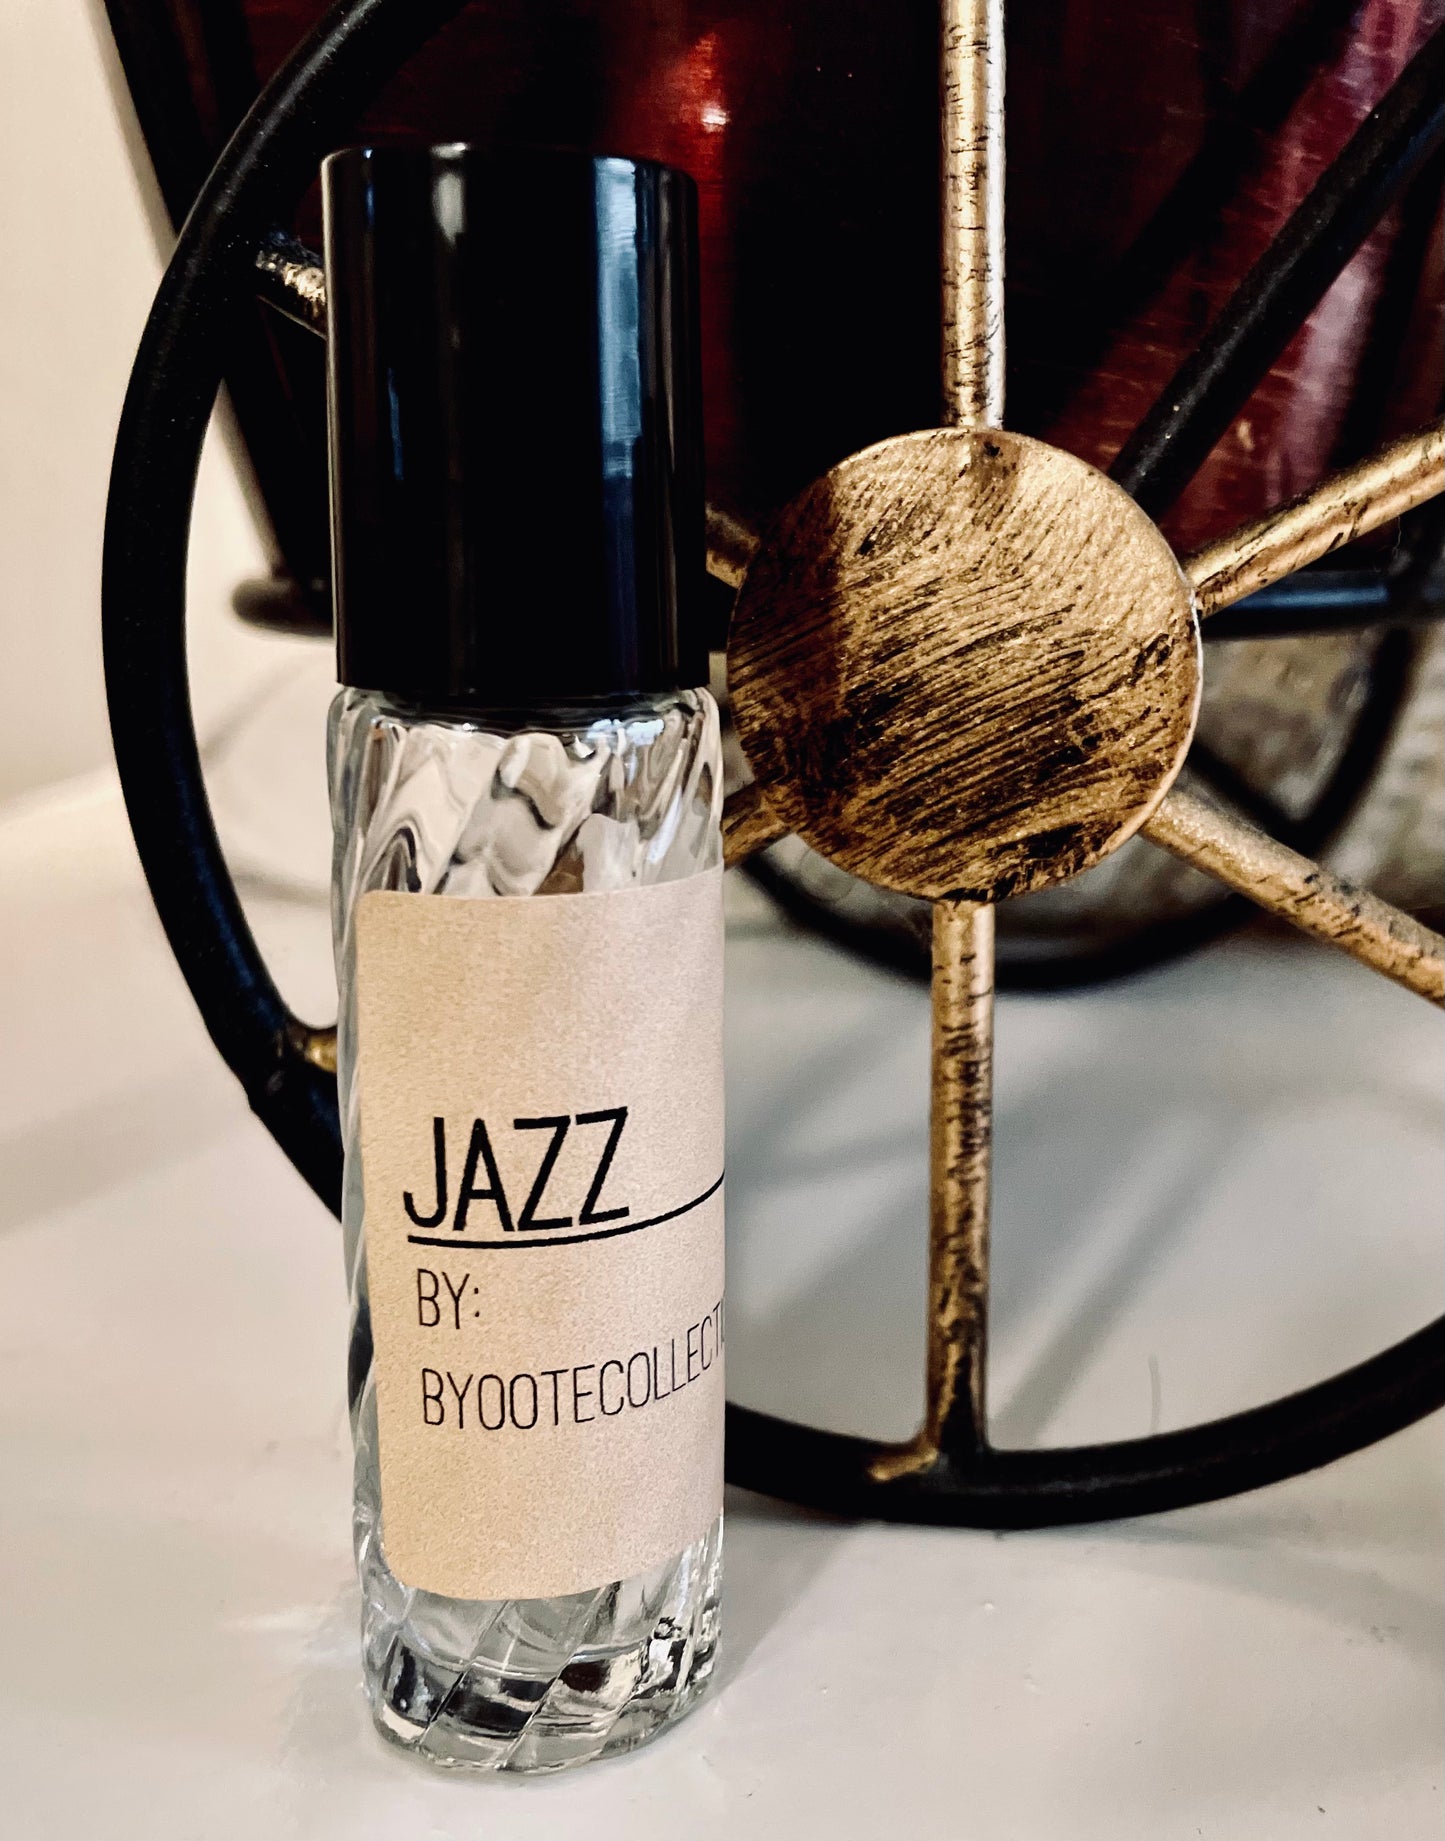 Jazz ( smooth & classy type)